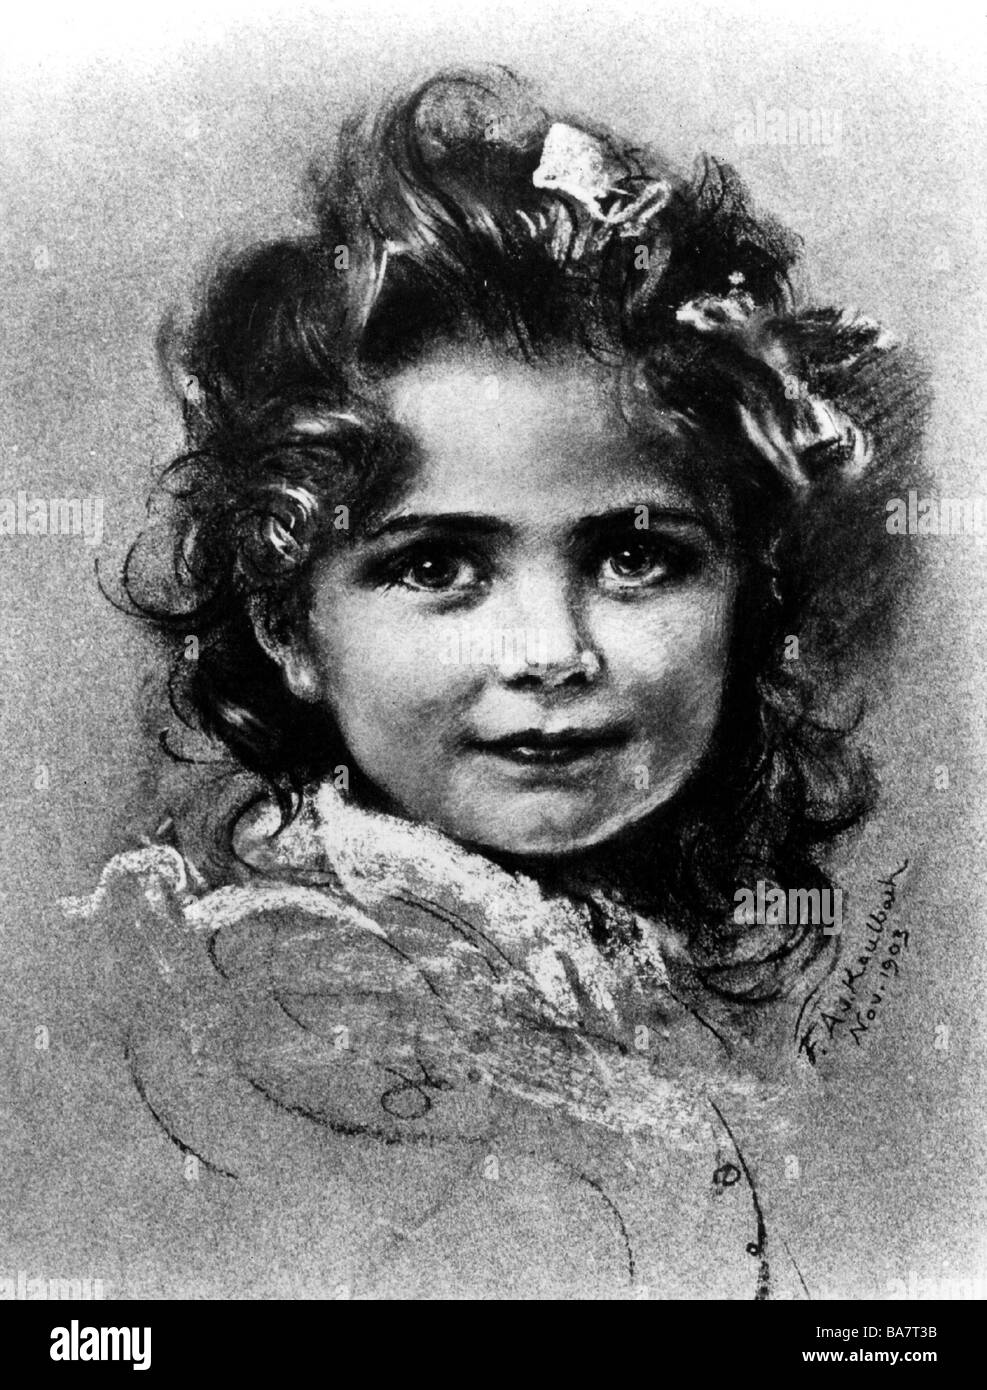 Anastasia Nicholaevna, 18.6.1901 - 16.7.1918, Grand Duchess of Russia, portrait, after pastel by Friedrich August Kaulbach, November 1903, Stock Photo